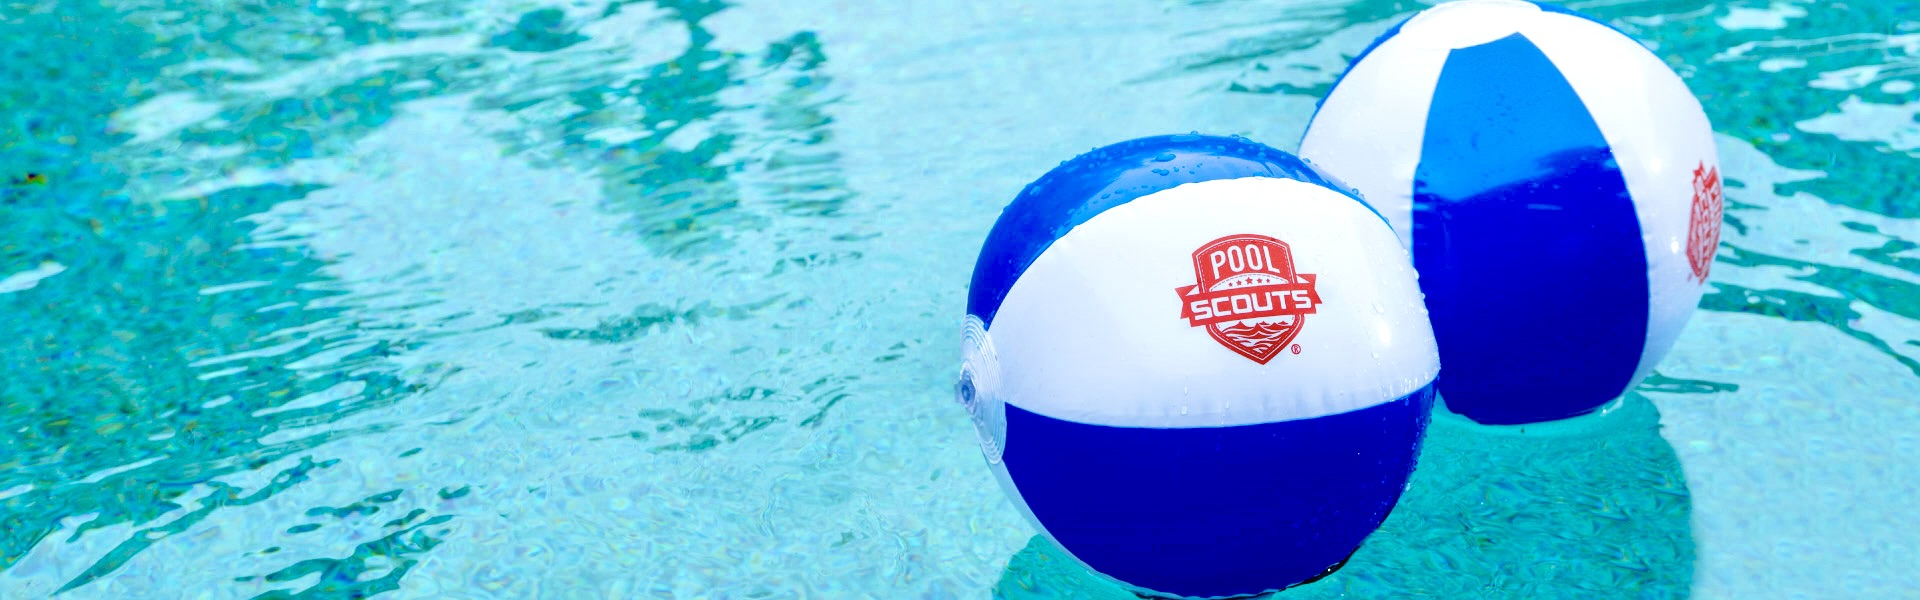 Pool Scouts beach balls in clean pool water